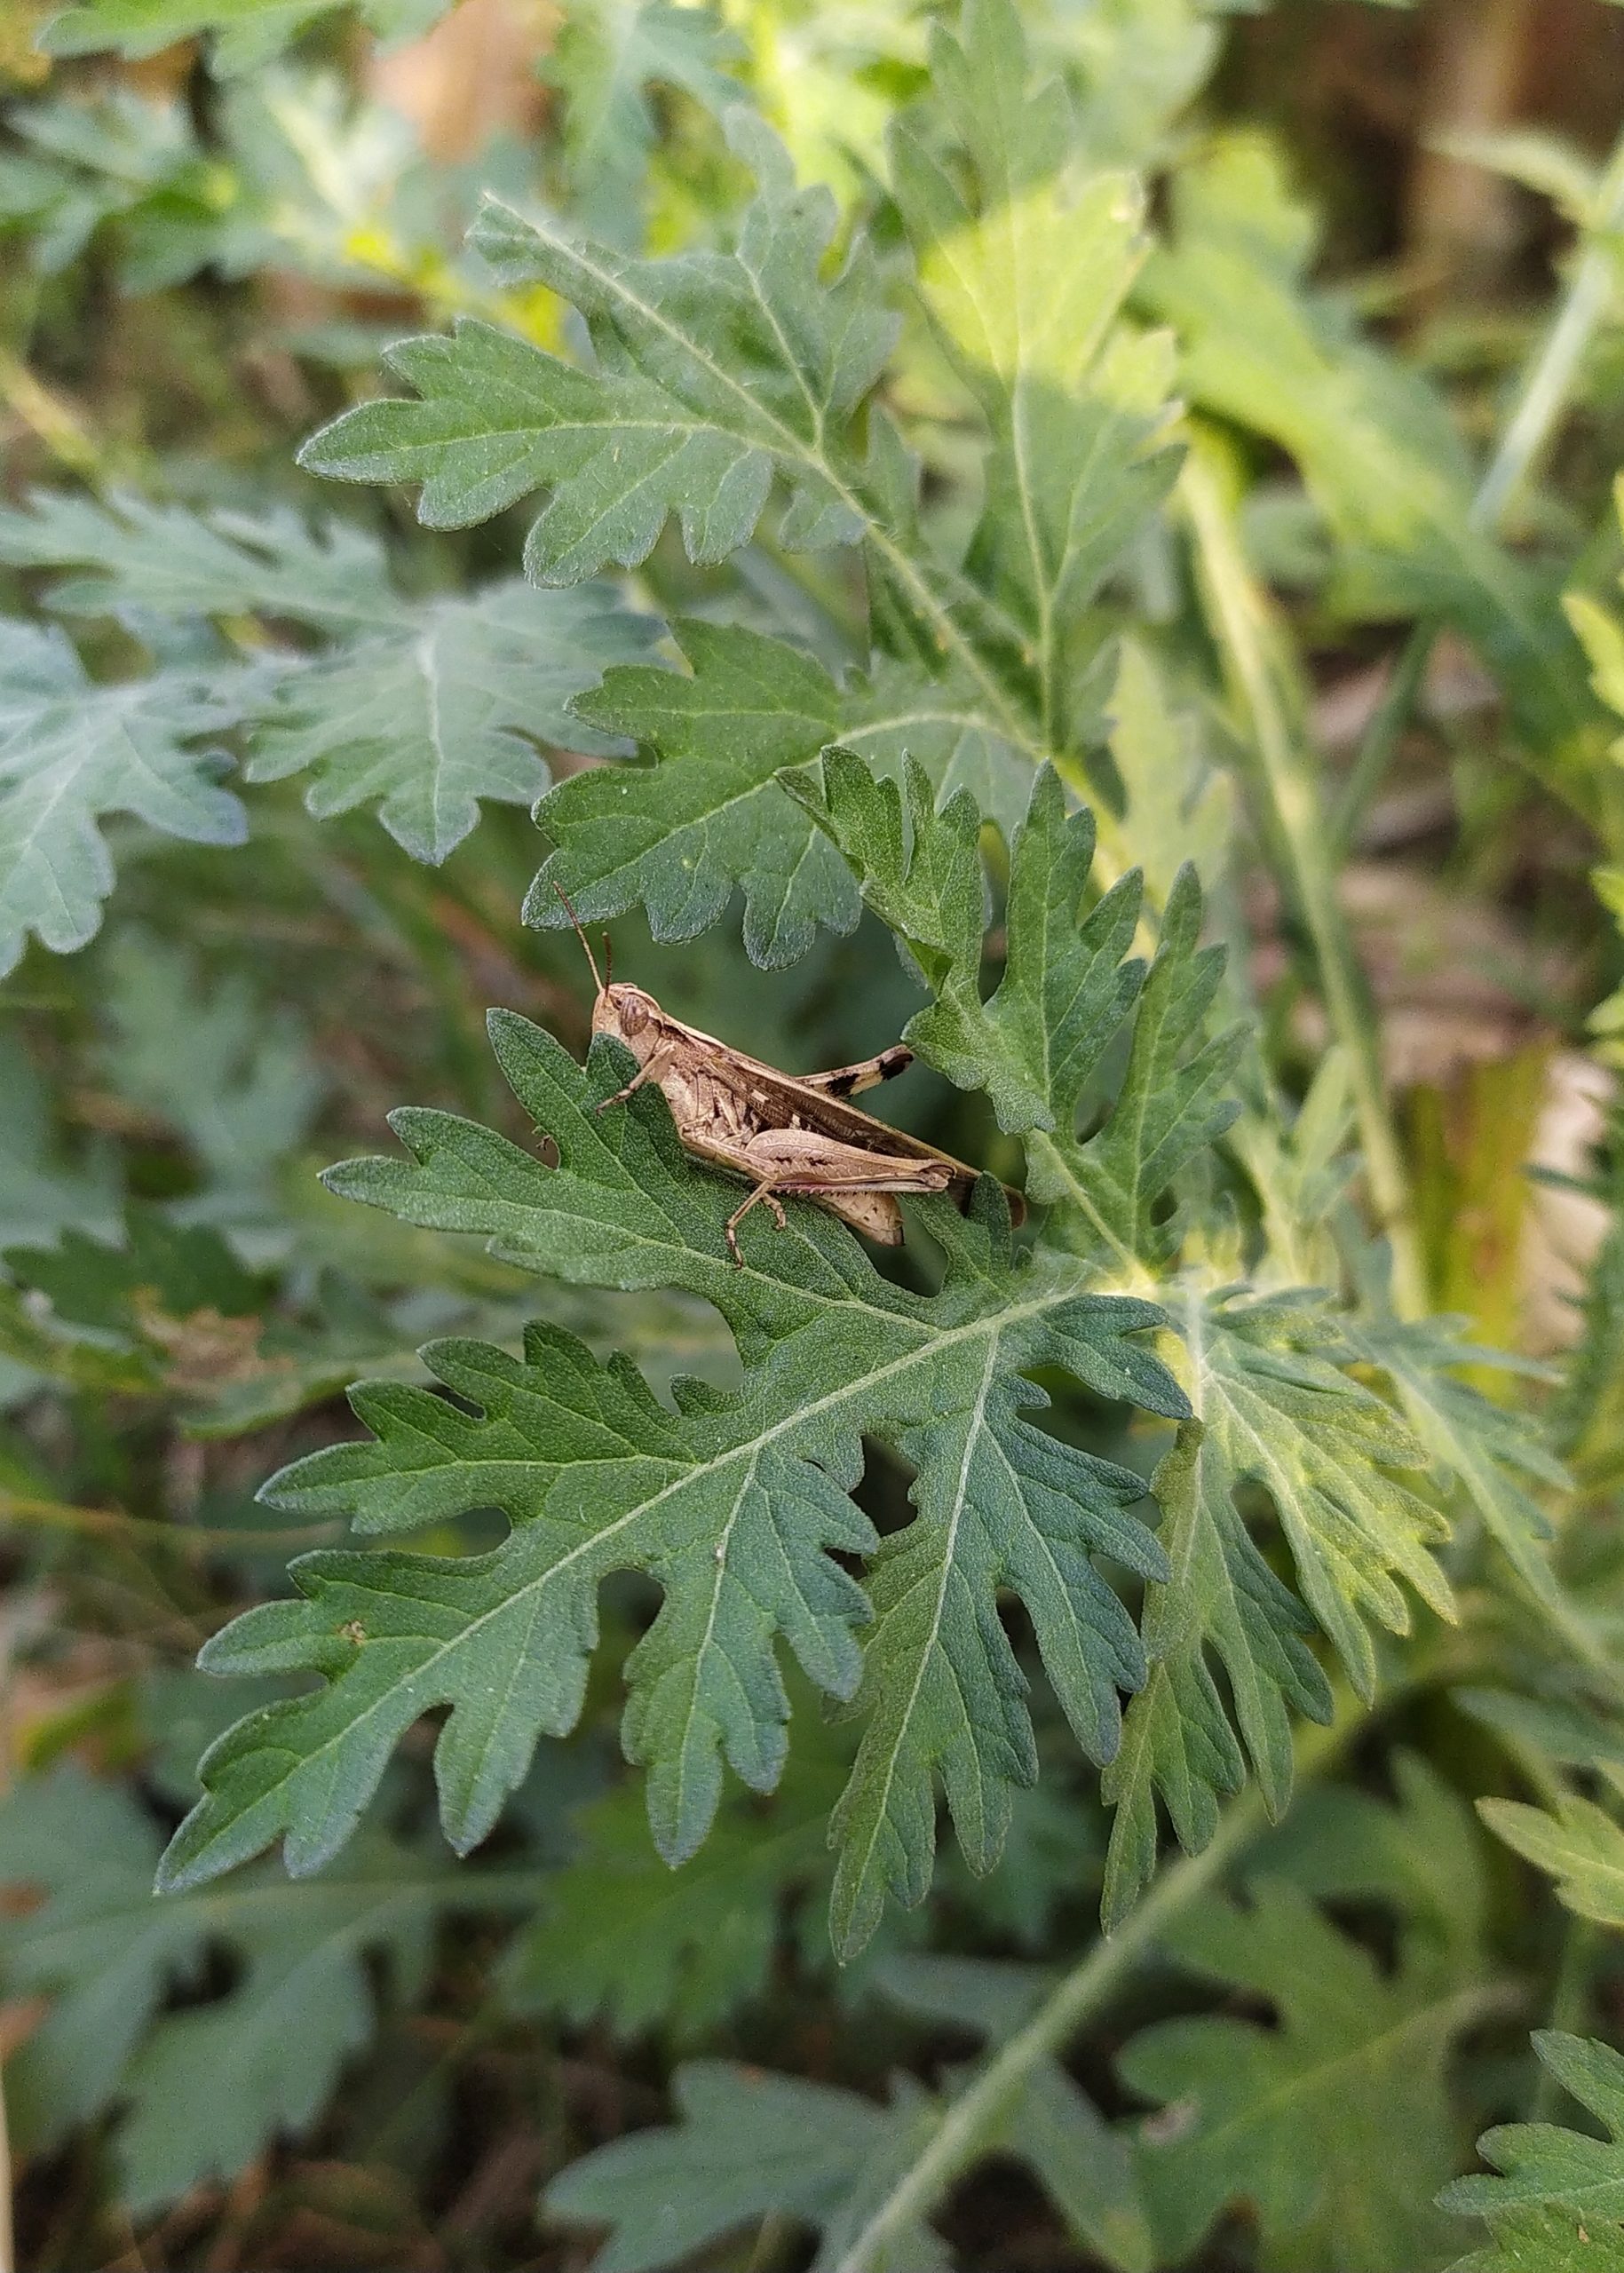 A grasshopper on a plant